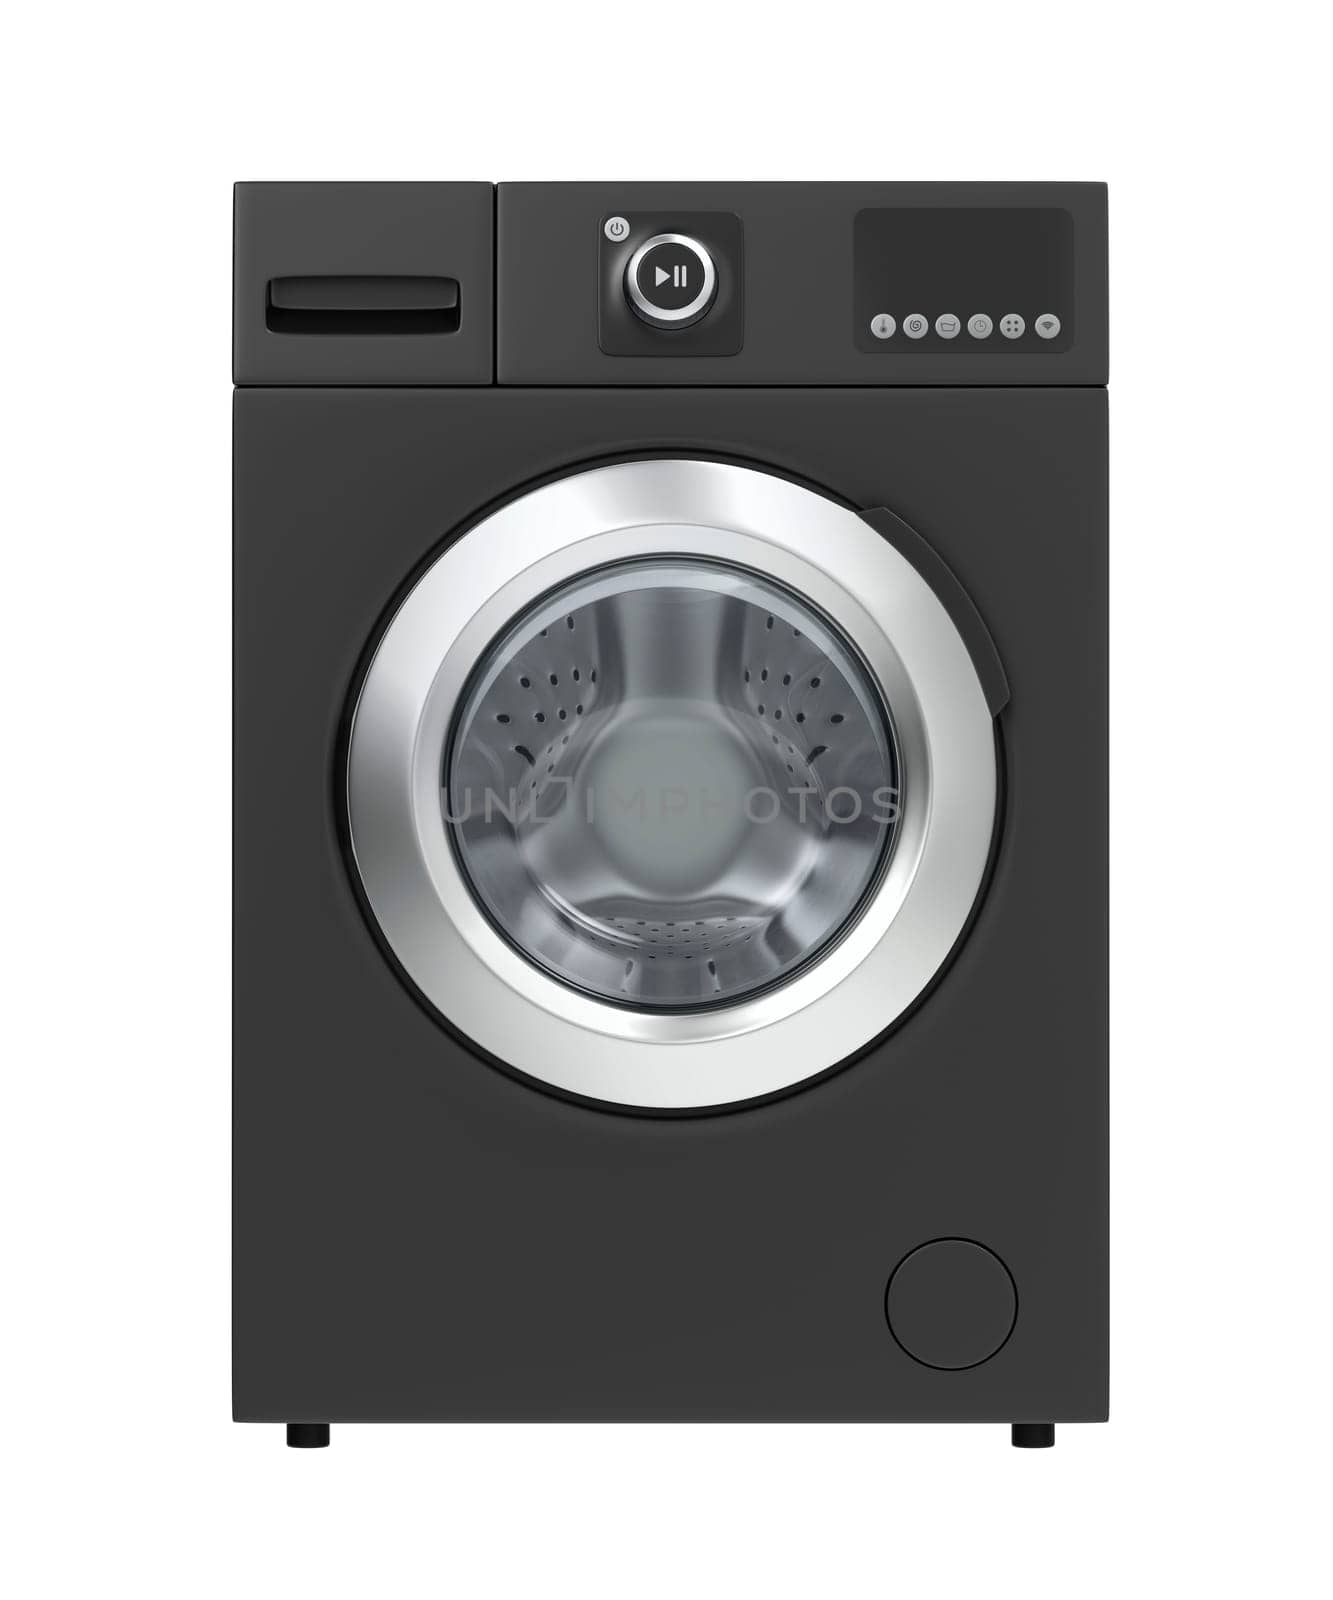 Black washing machine by magraphics